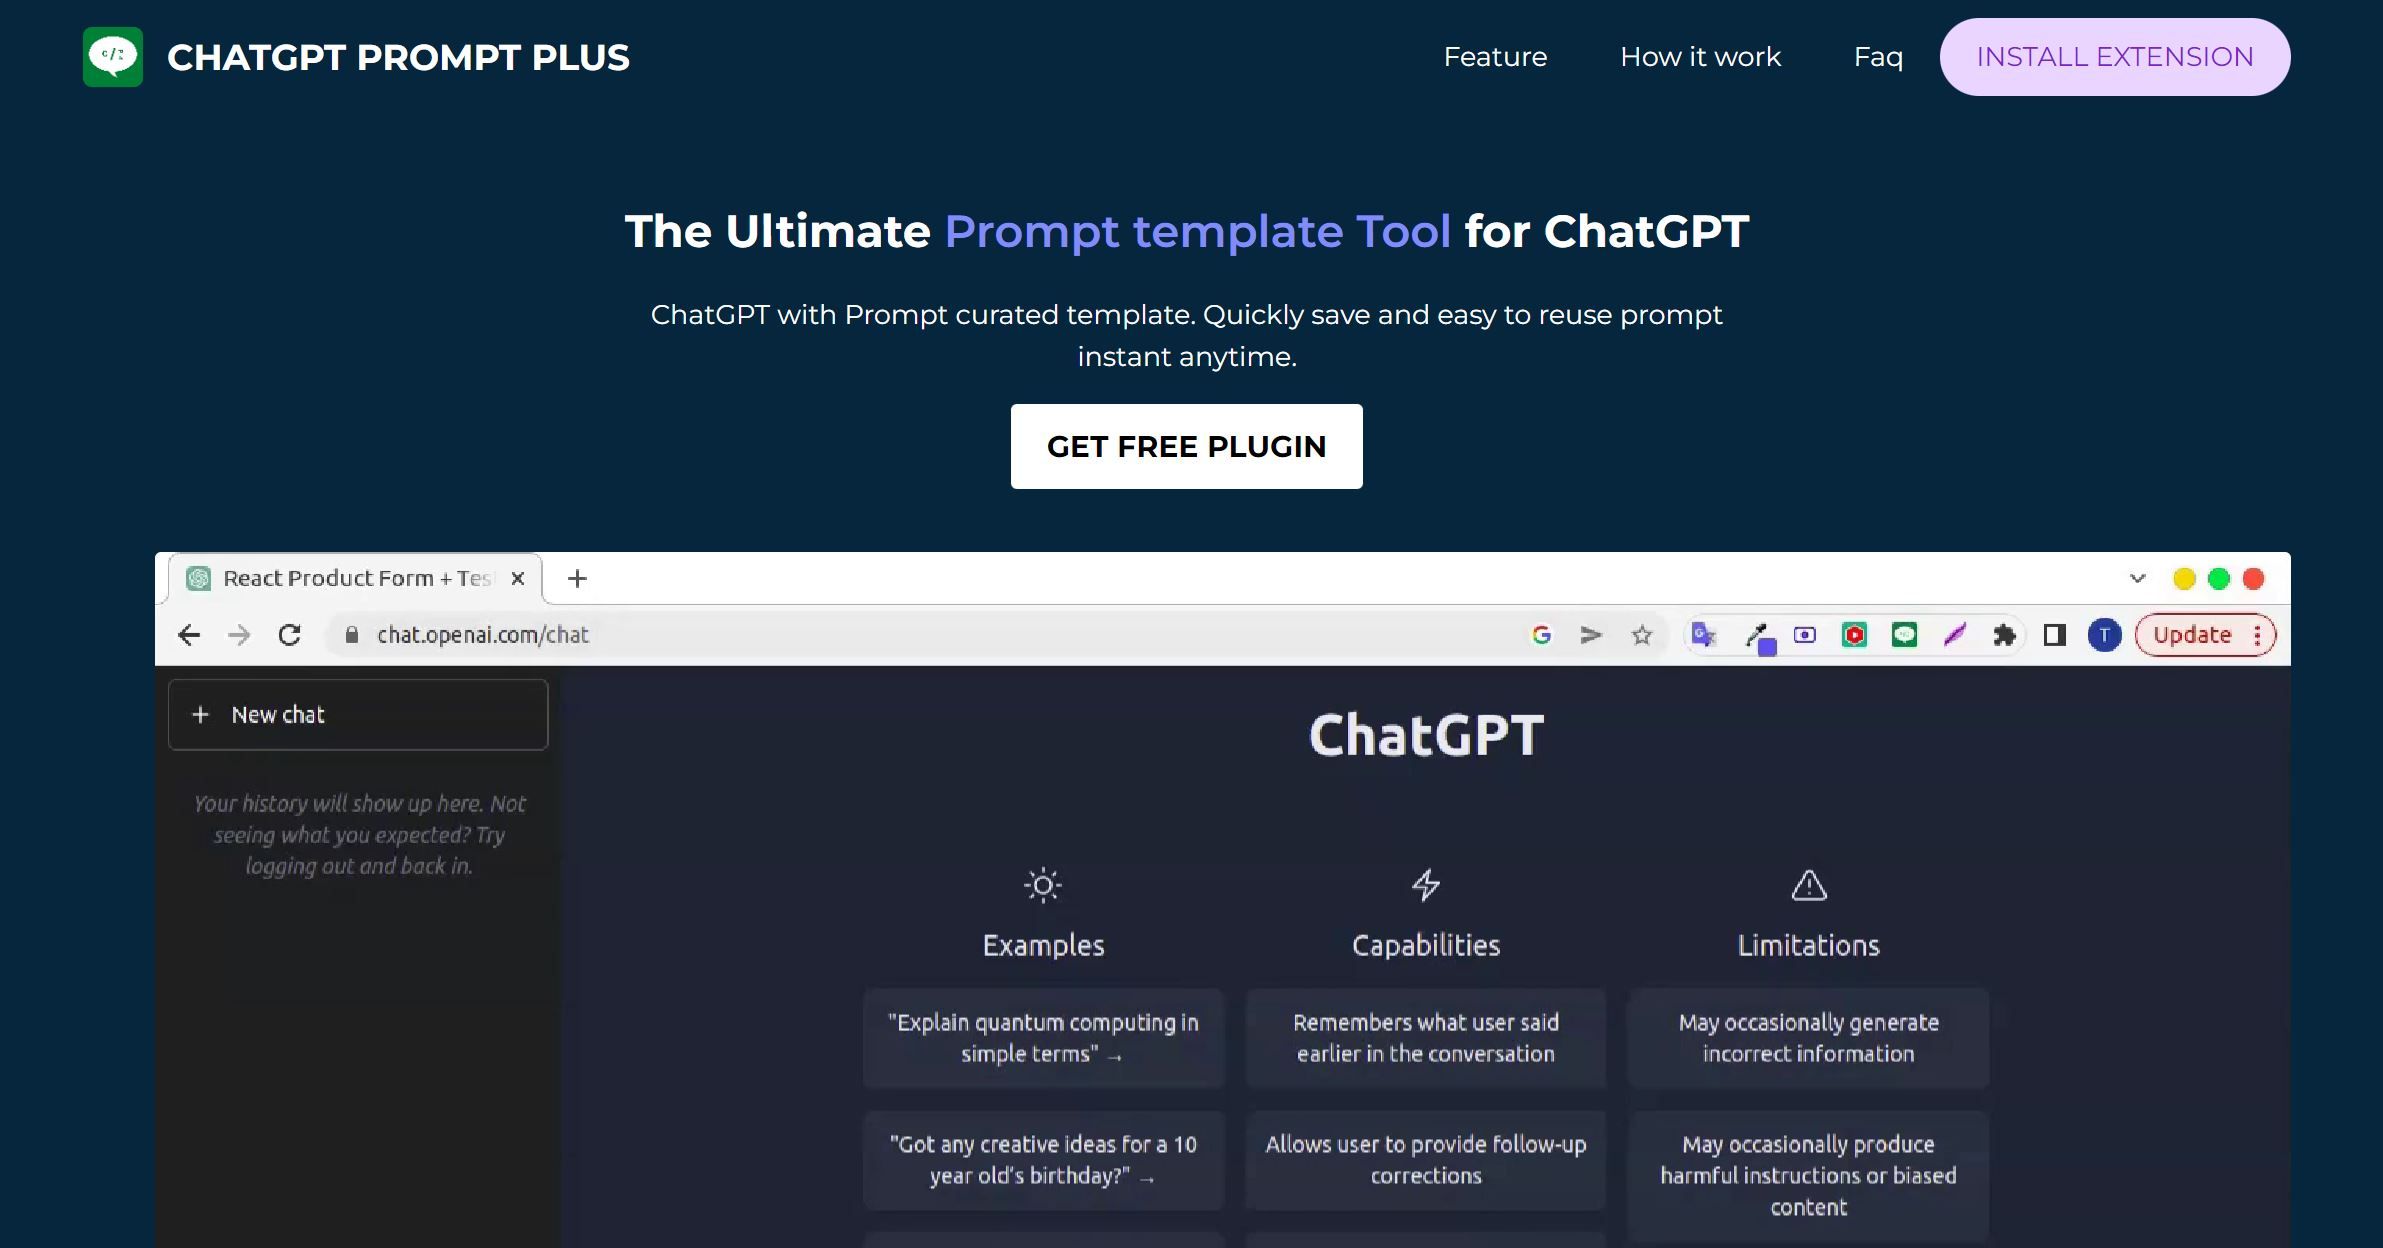 Post: ChatGPT Prompt Plus